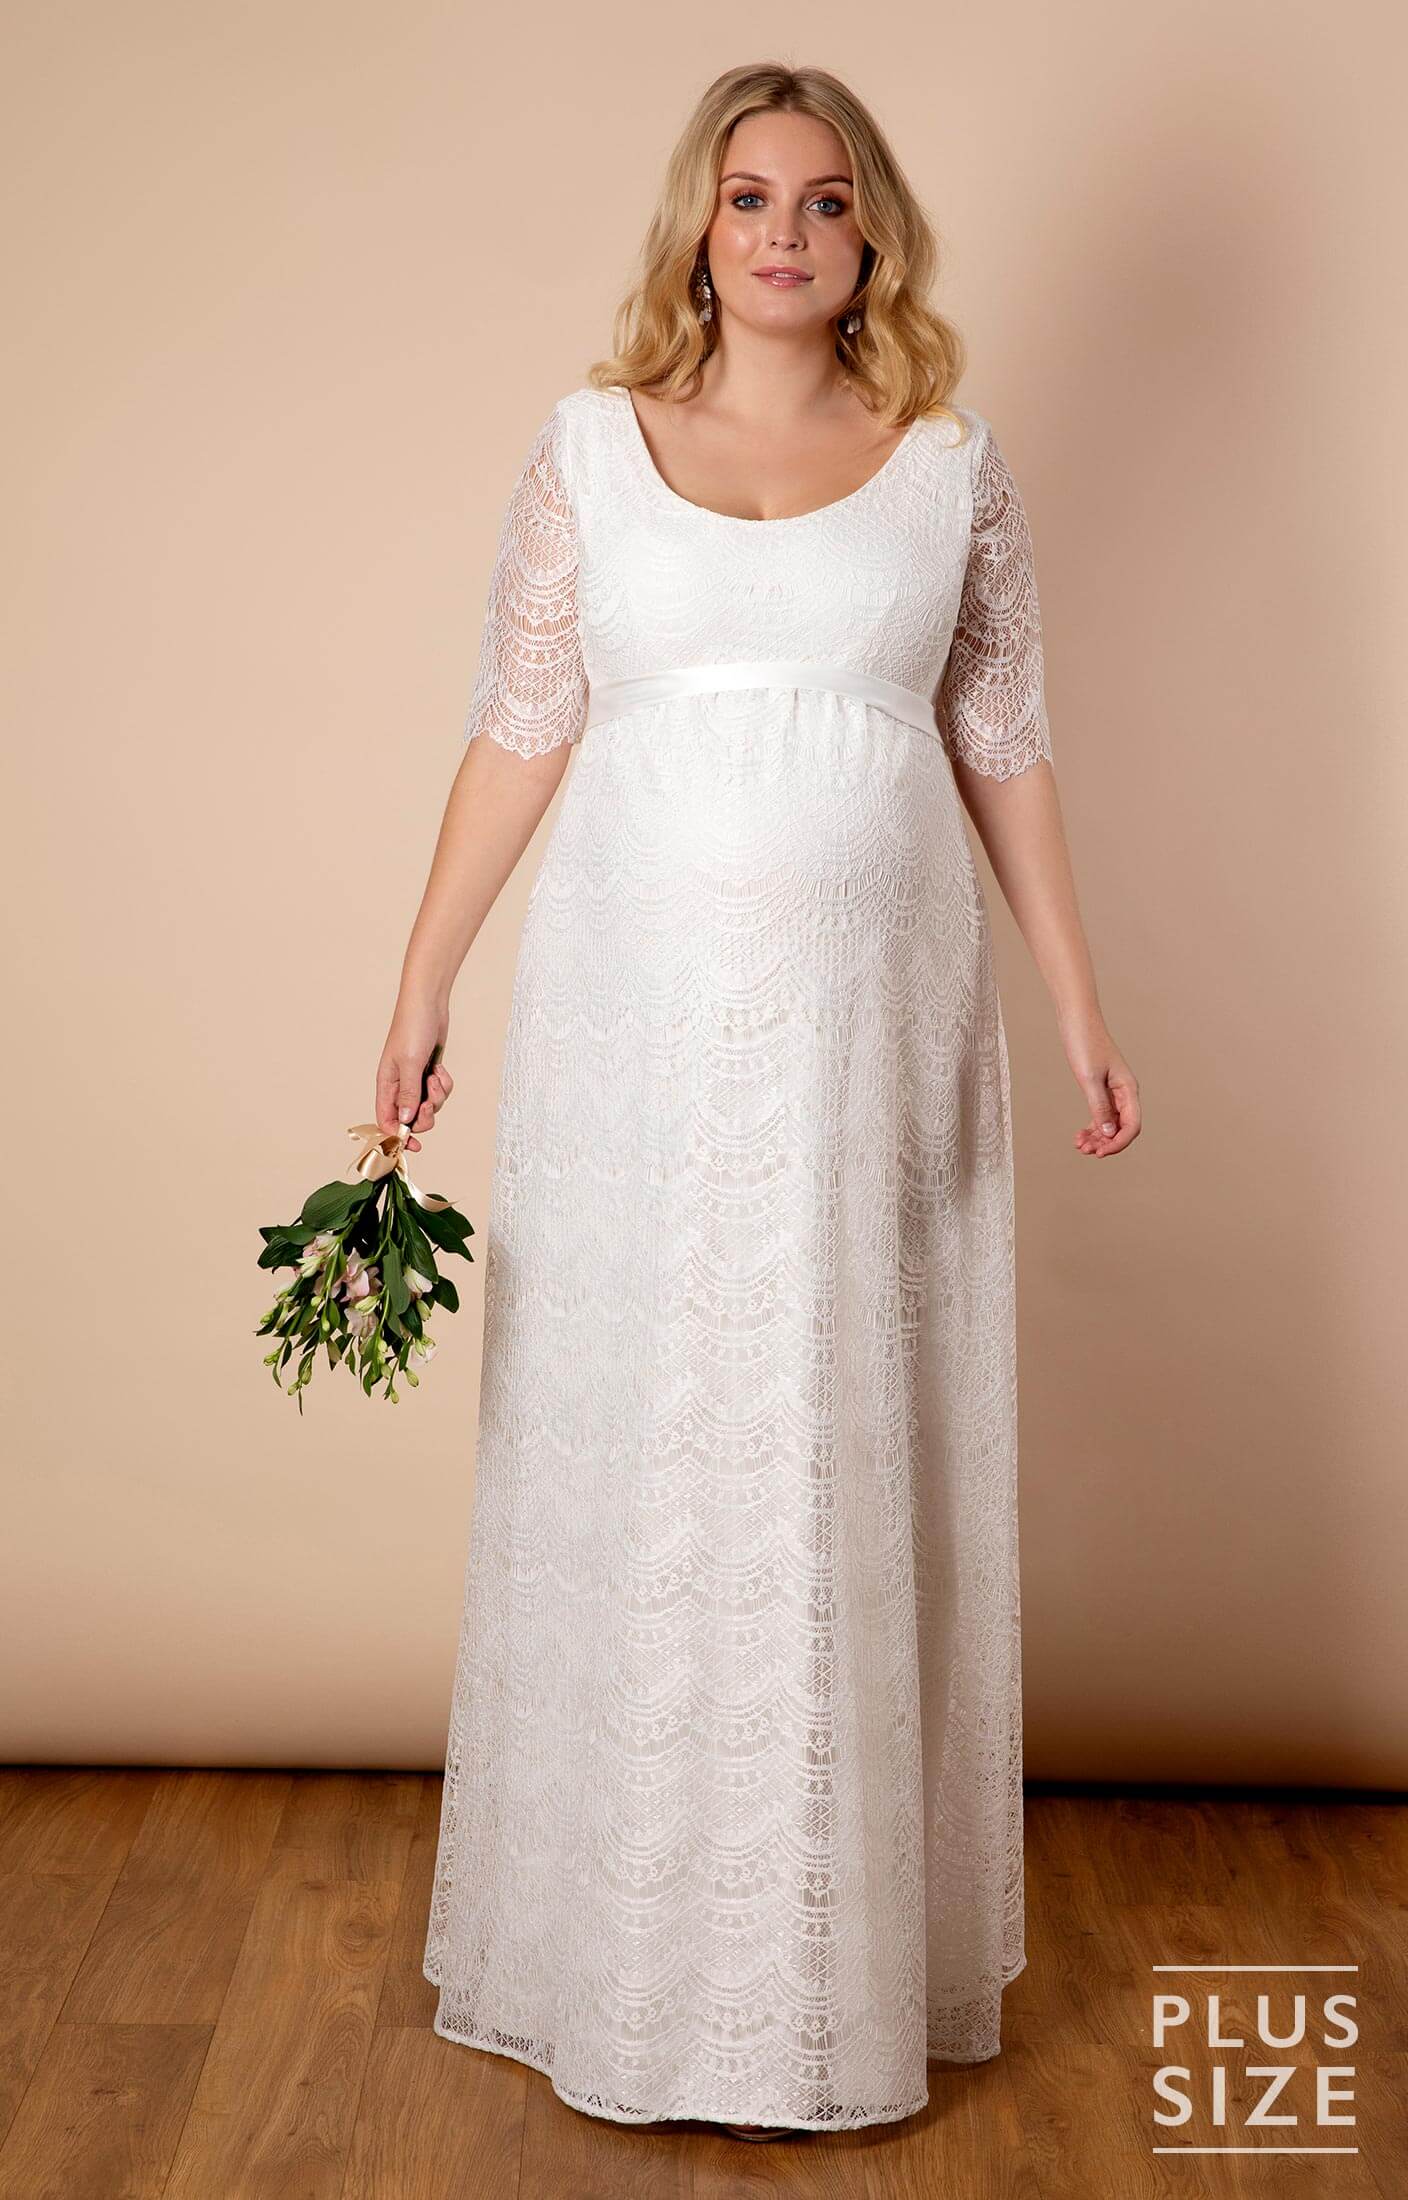 Verona Plus Size Maternity Wedding Gown Ivory White